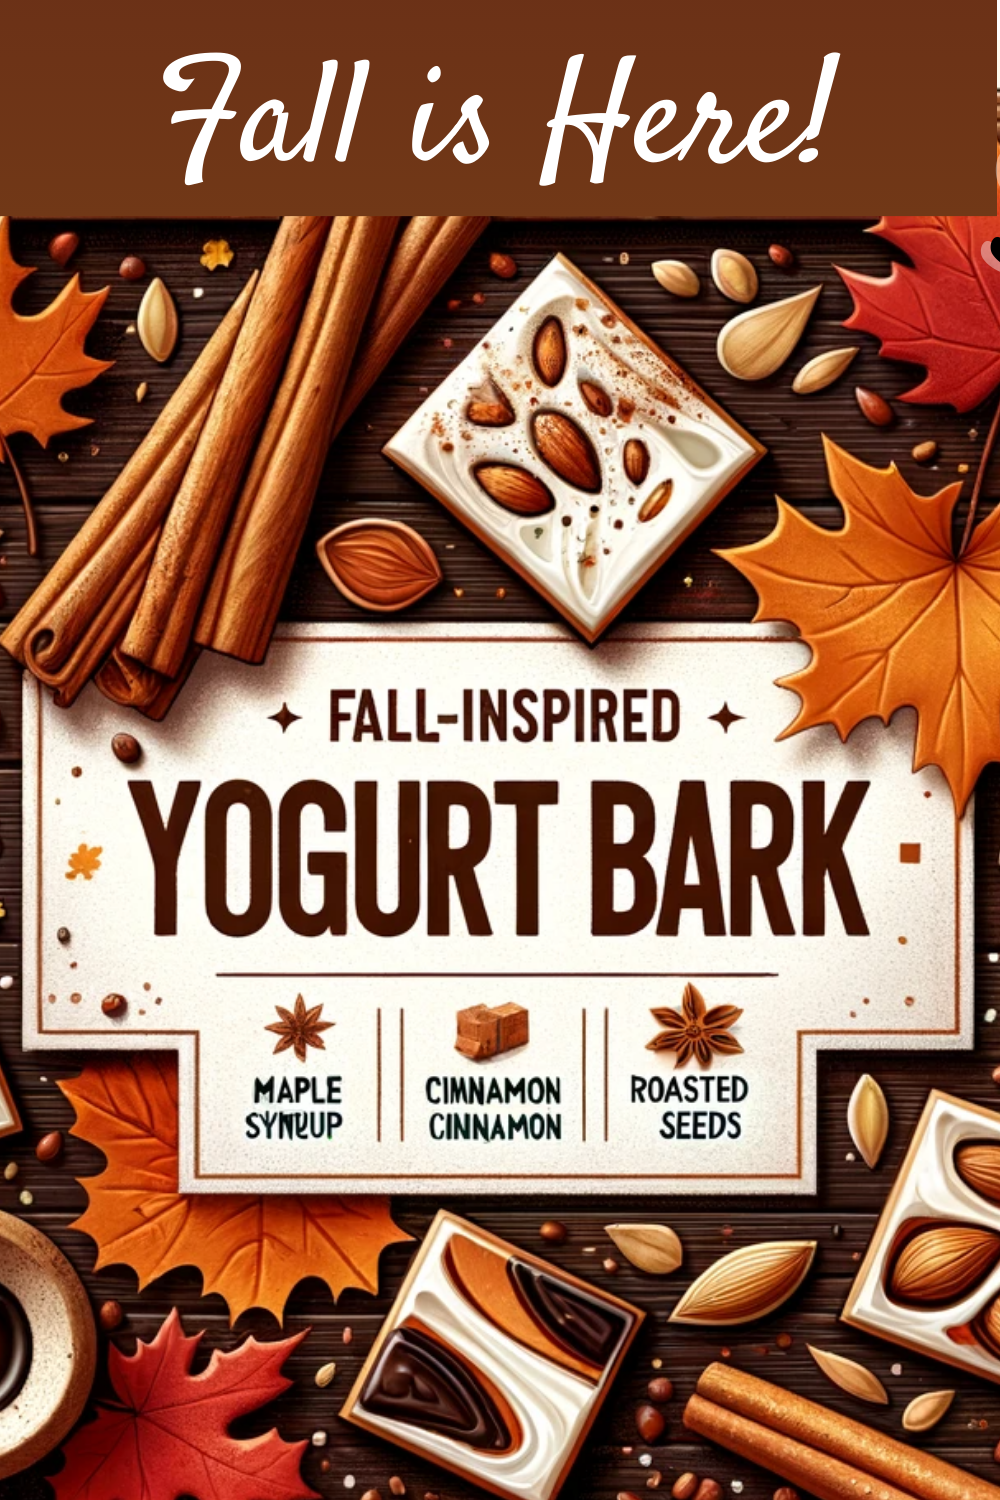 A Perfect Fall Treat - Yummy Yogurt Bark!